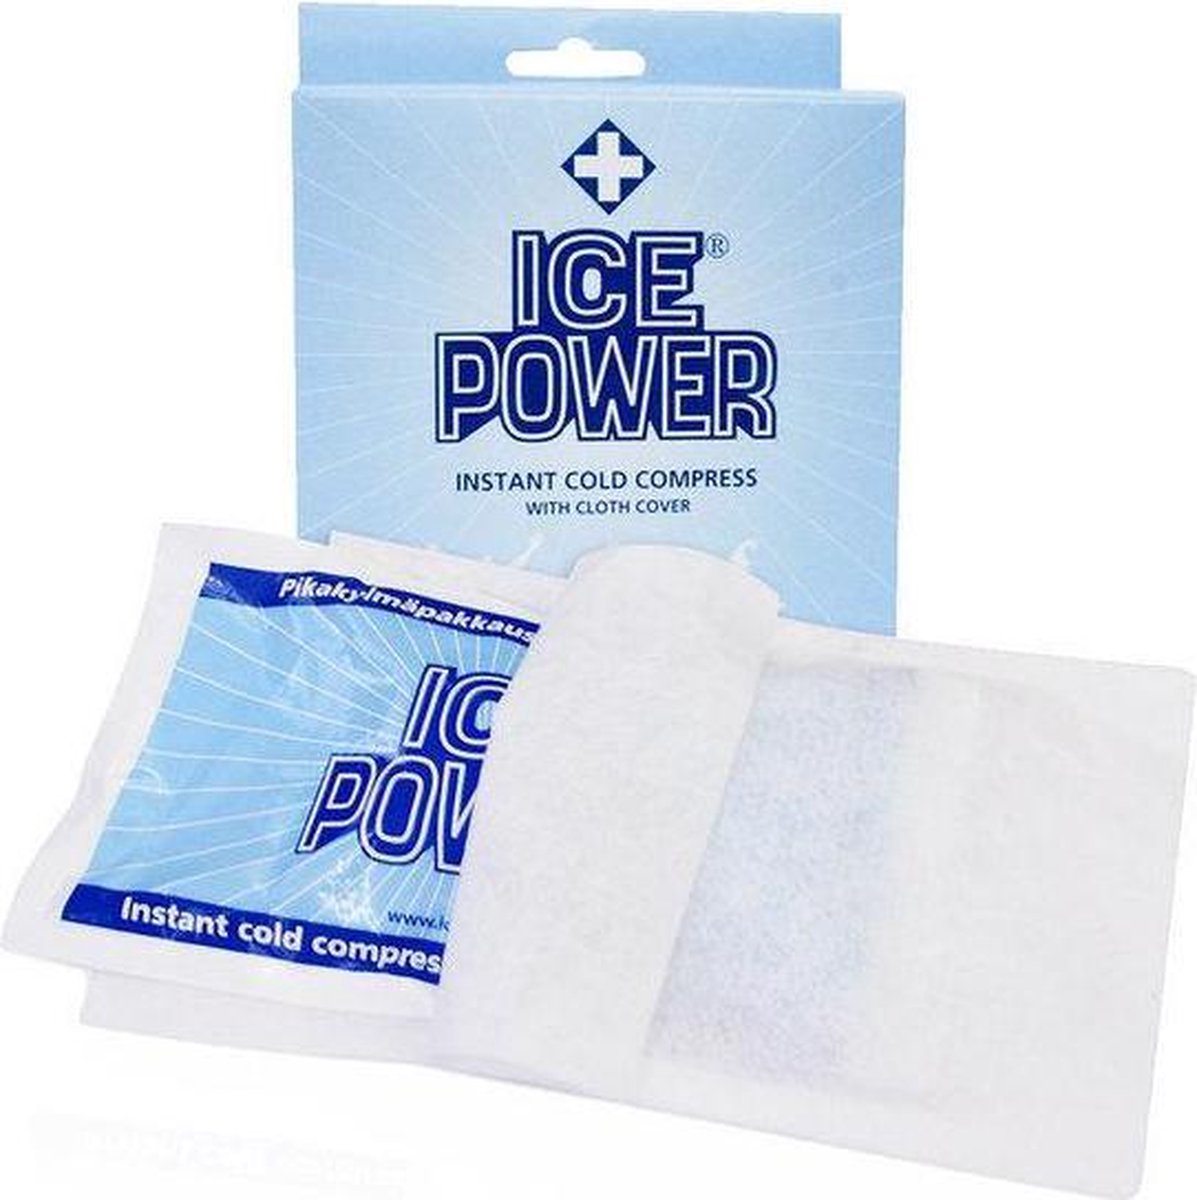 Bel terug galerij Heel boos Ice Power instant cold pack box | bol.com